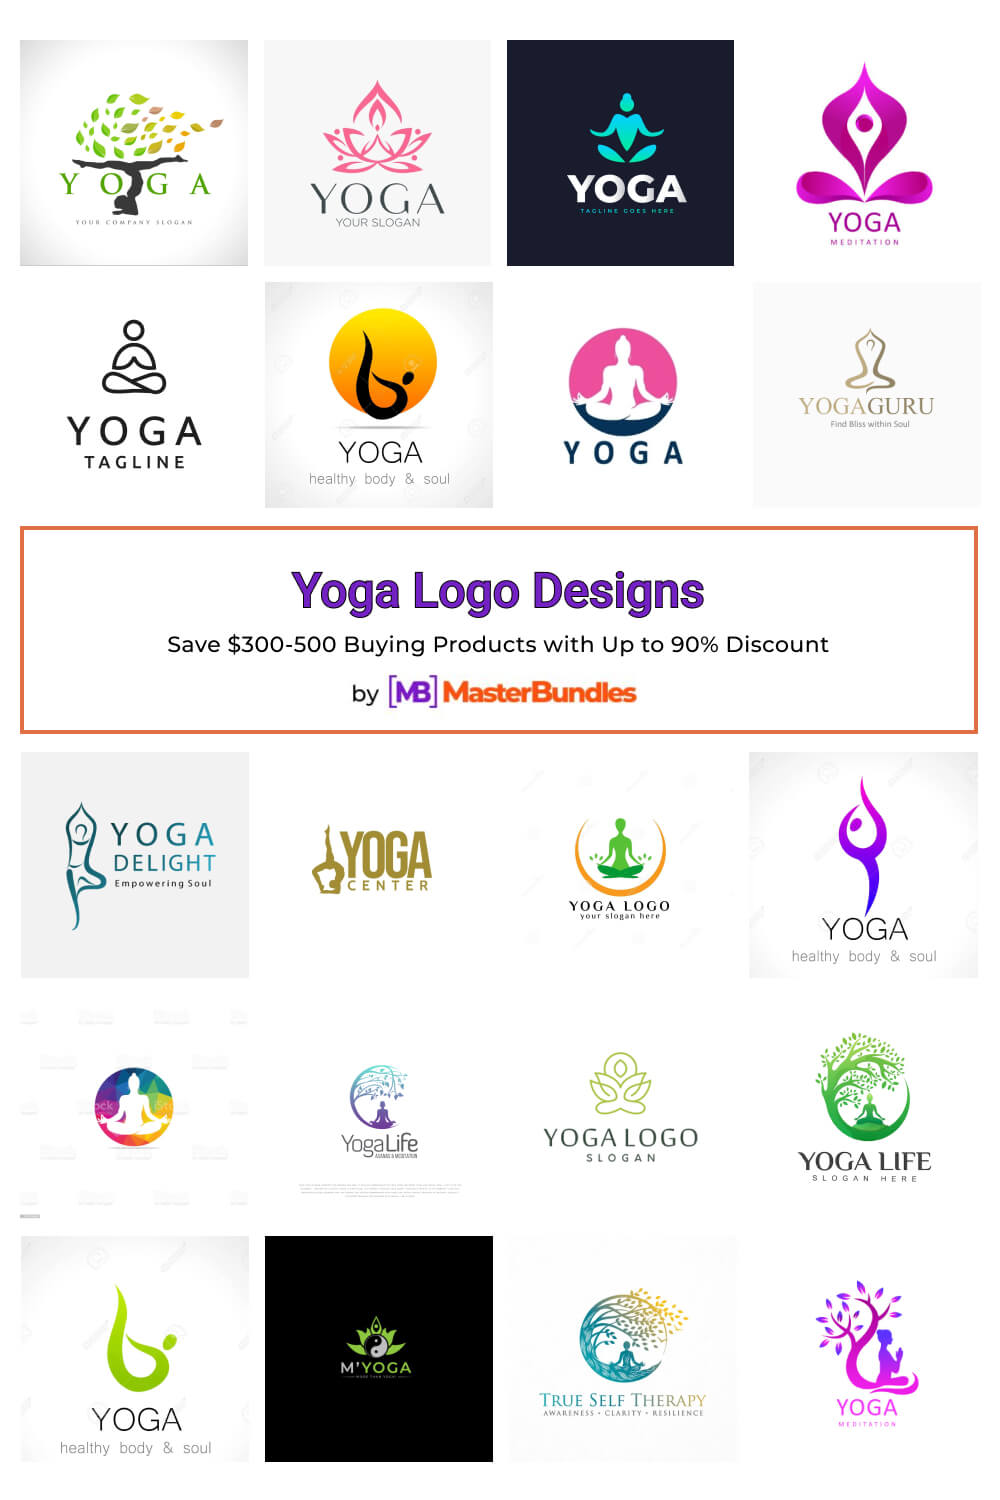 yoga logo designs pinterest image.